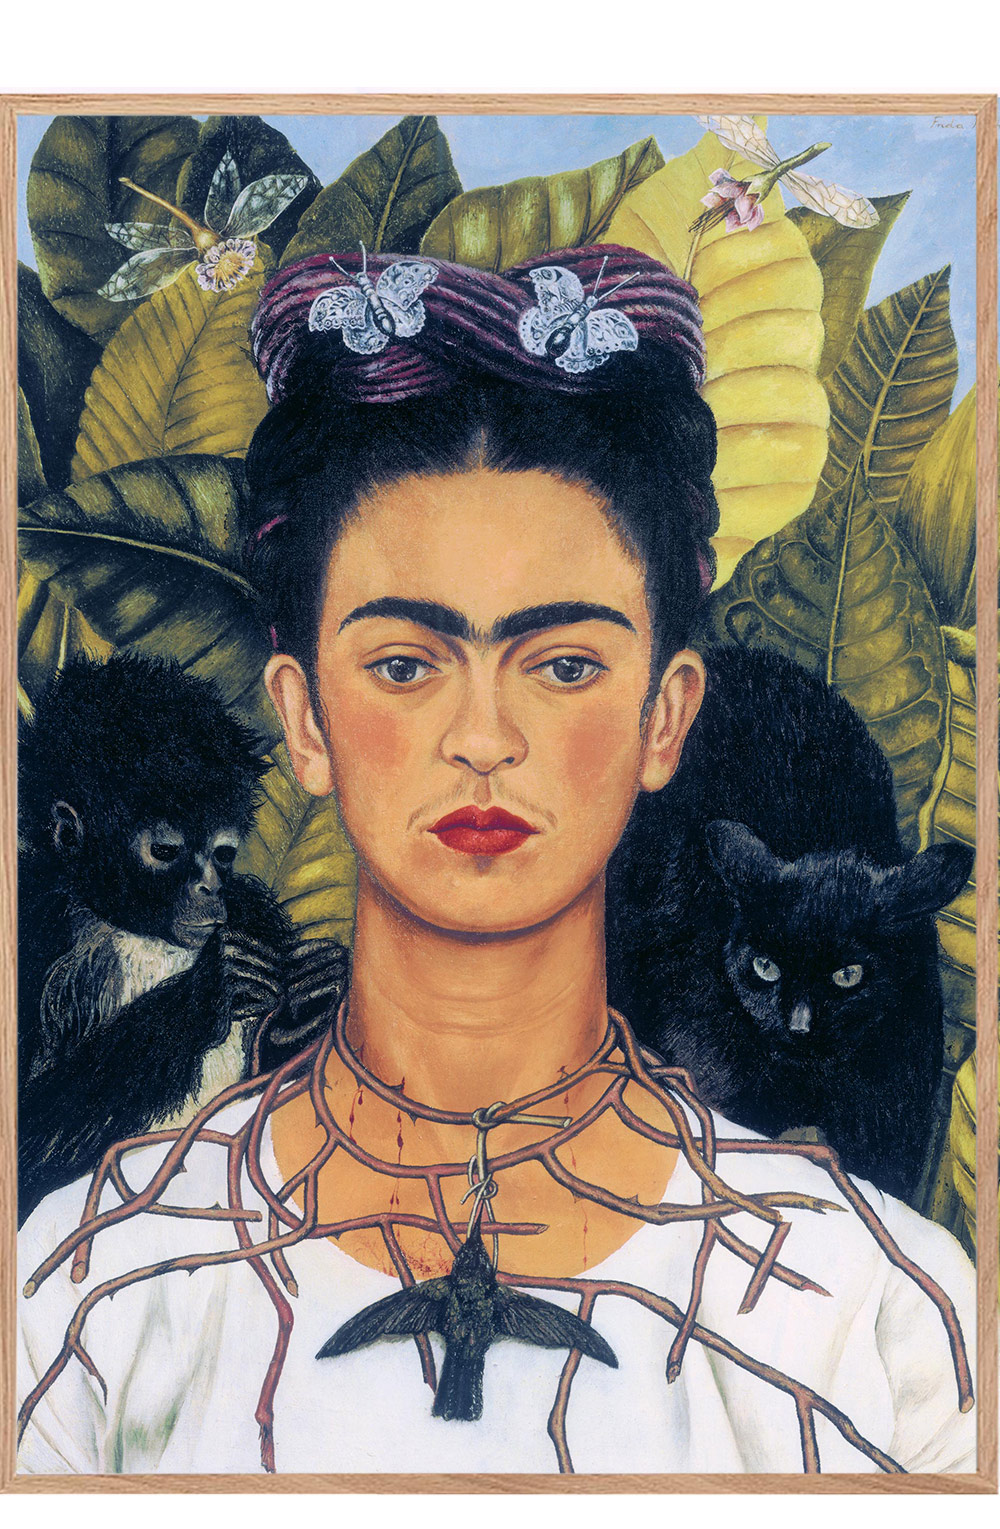 Life in Full Bloom: Frida Kahlo and Her Garden - Biography